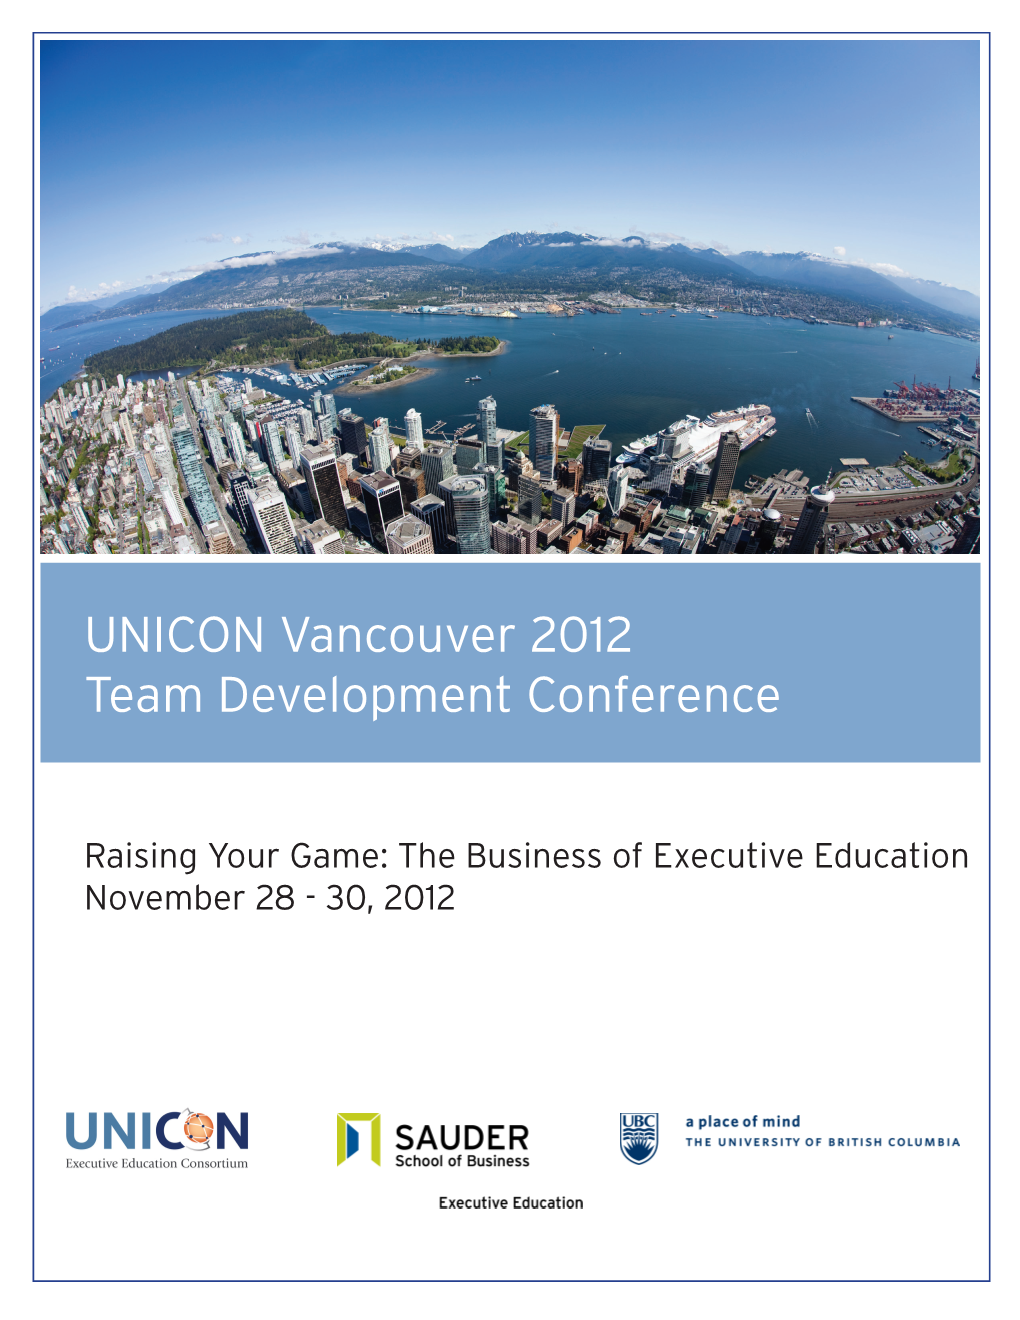 UNICON Vancouver 2012 Team Development Conference